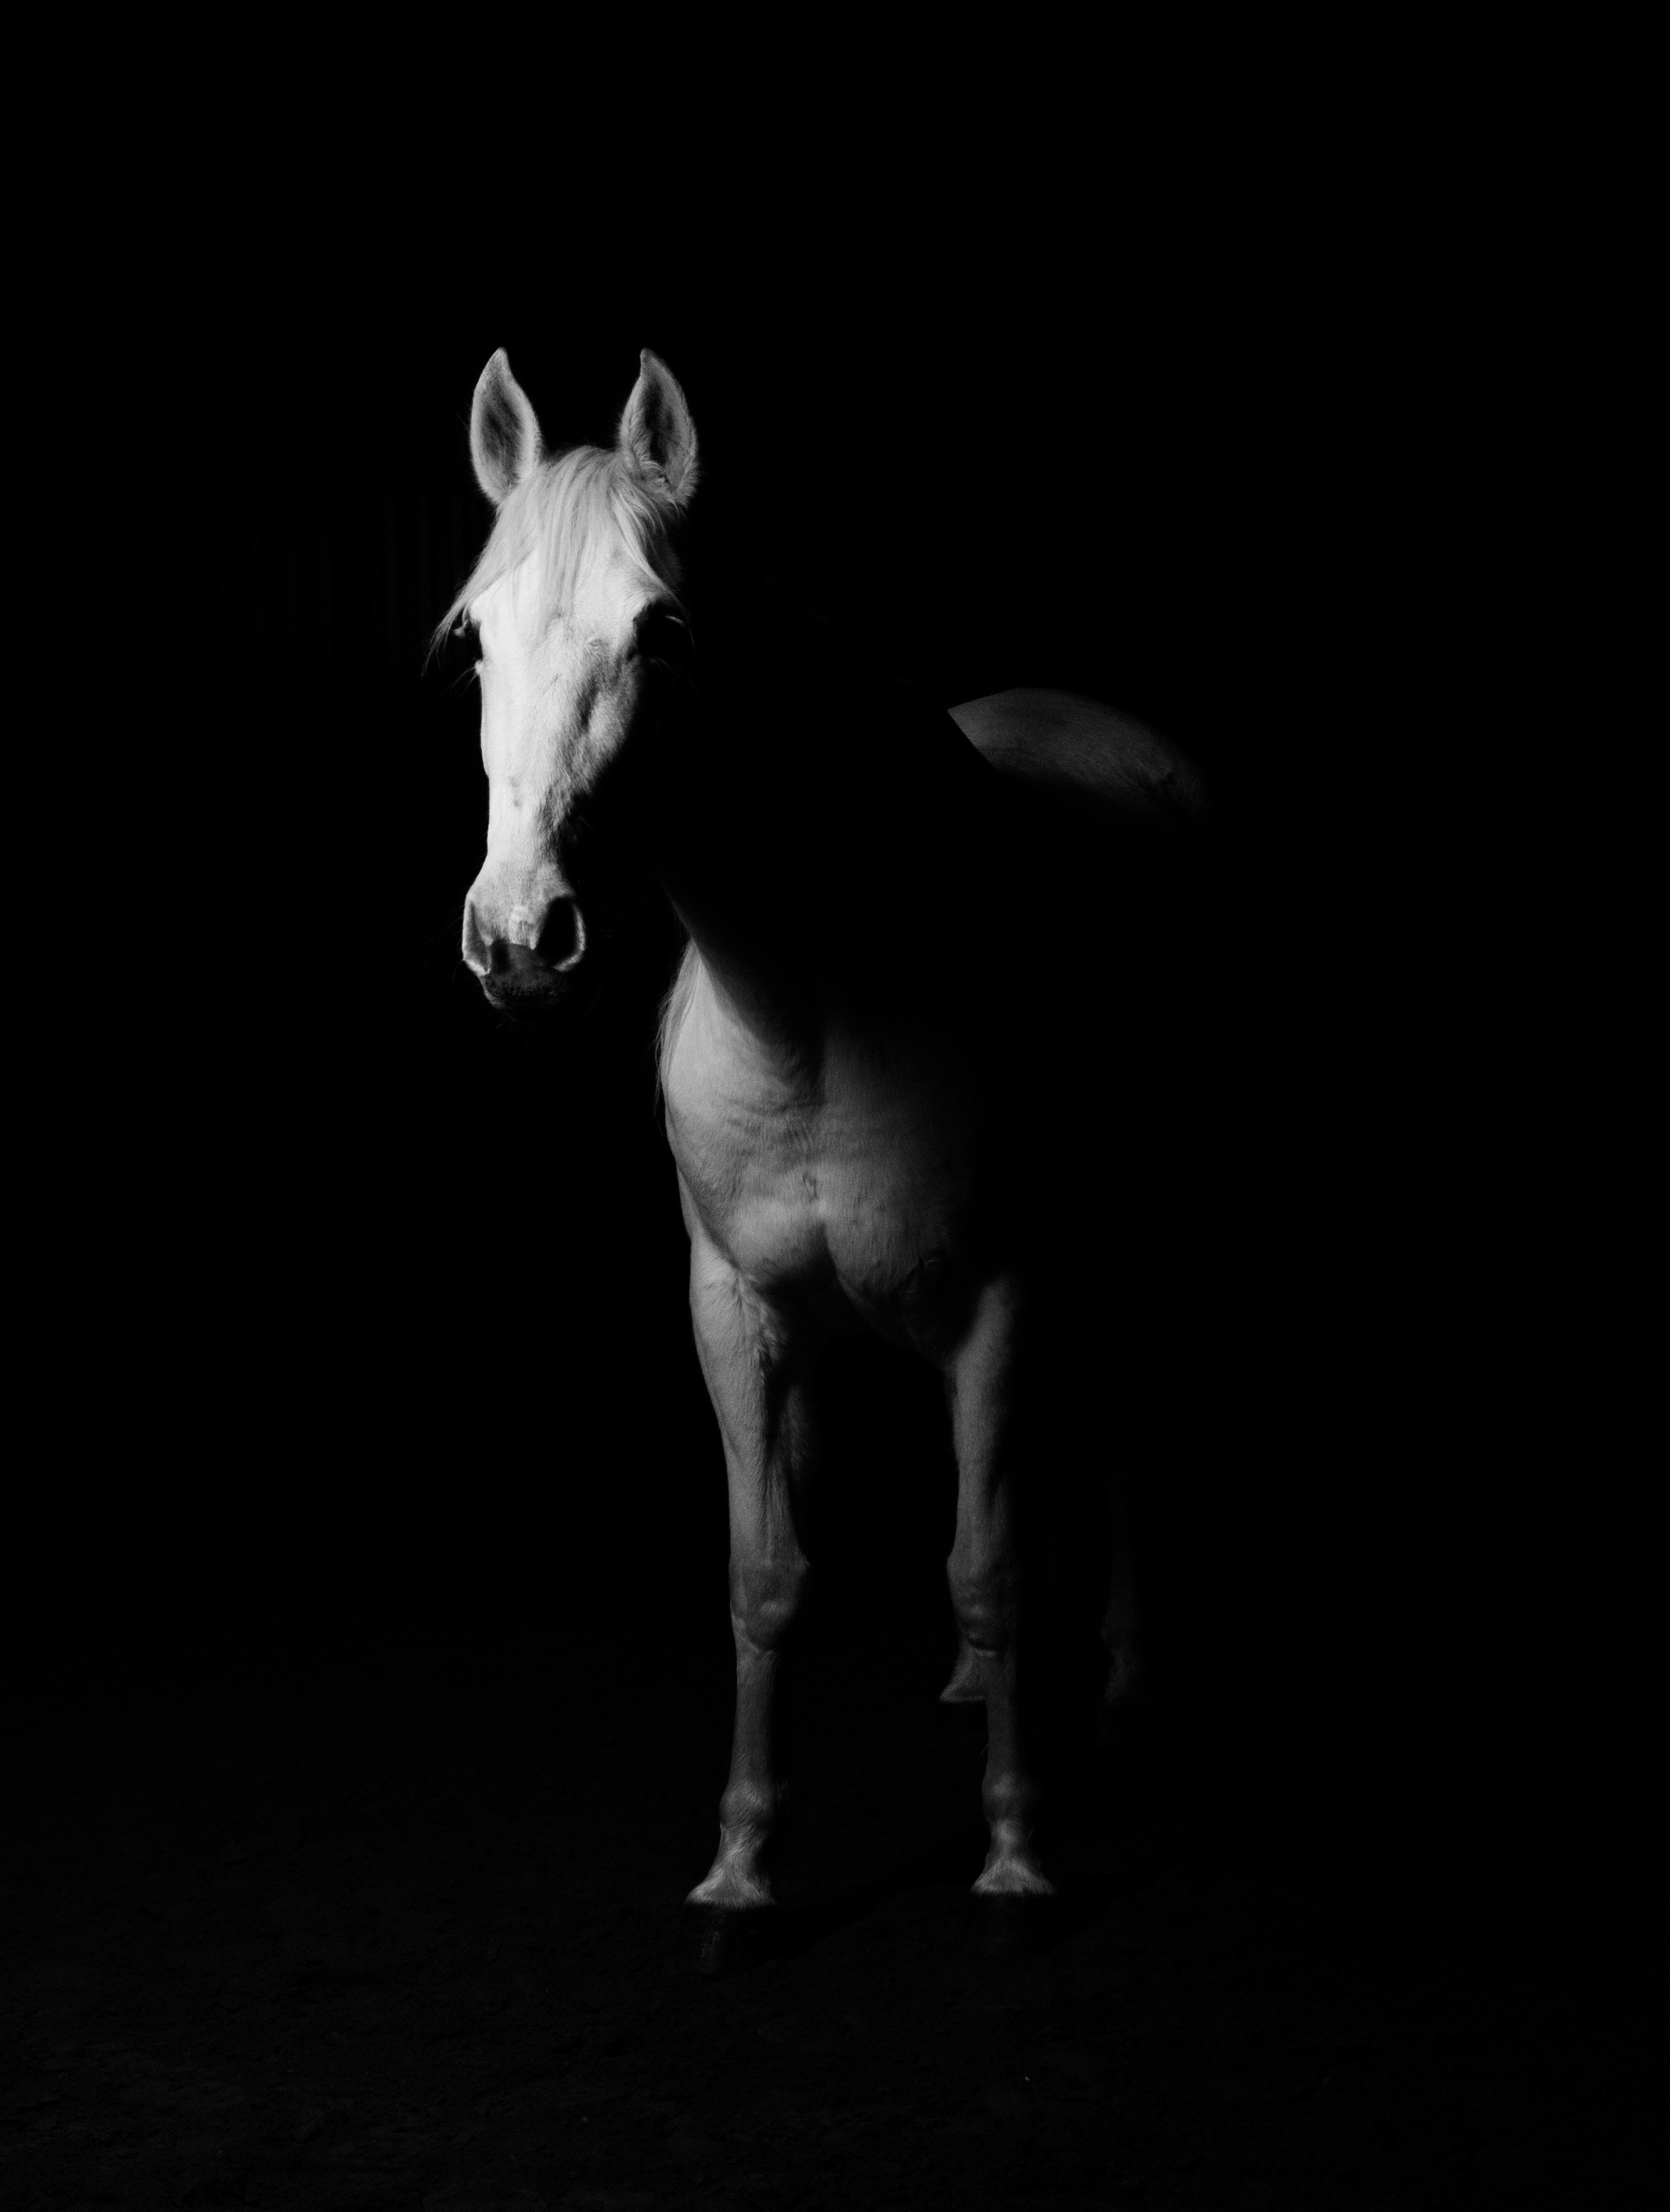 White Horse Black and White Photo · Free